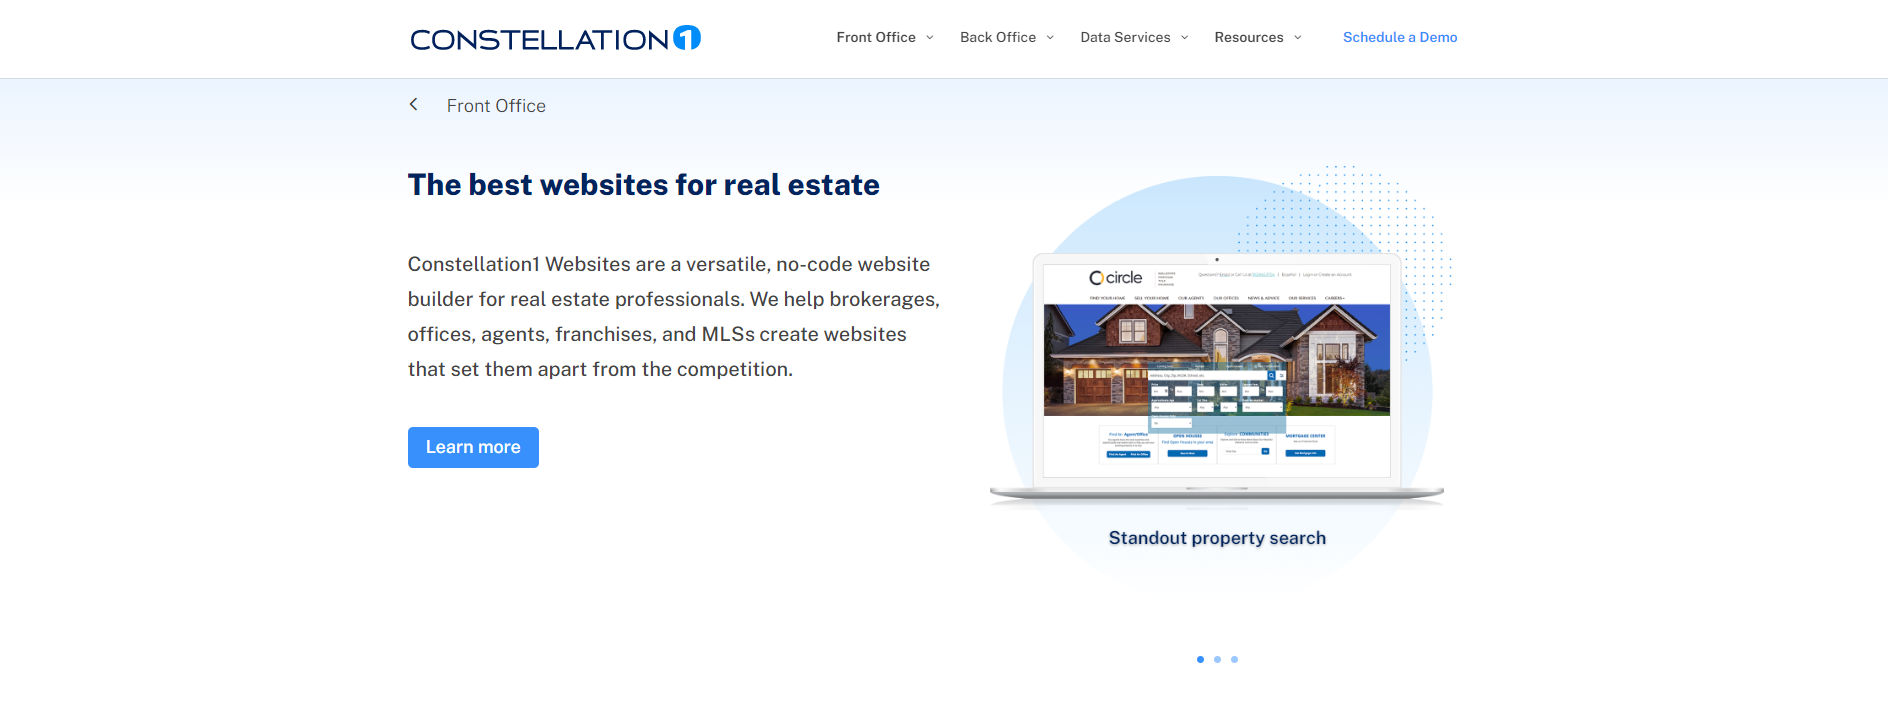 Constellation1 Websites Landing Page